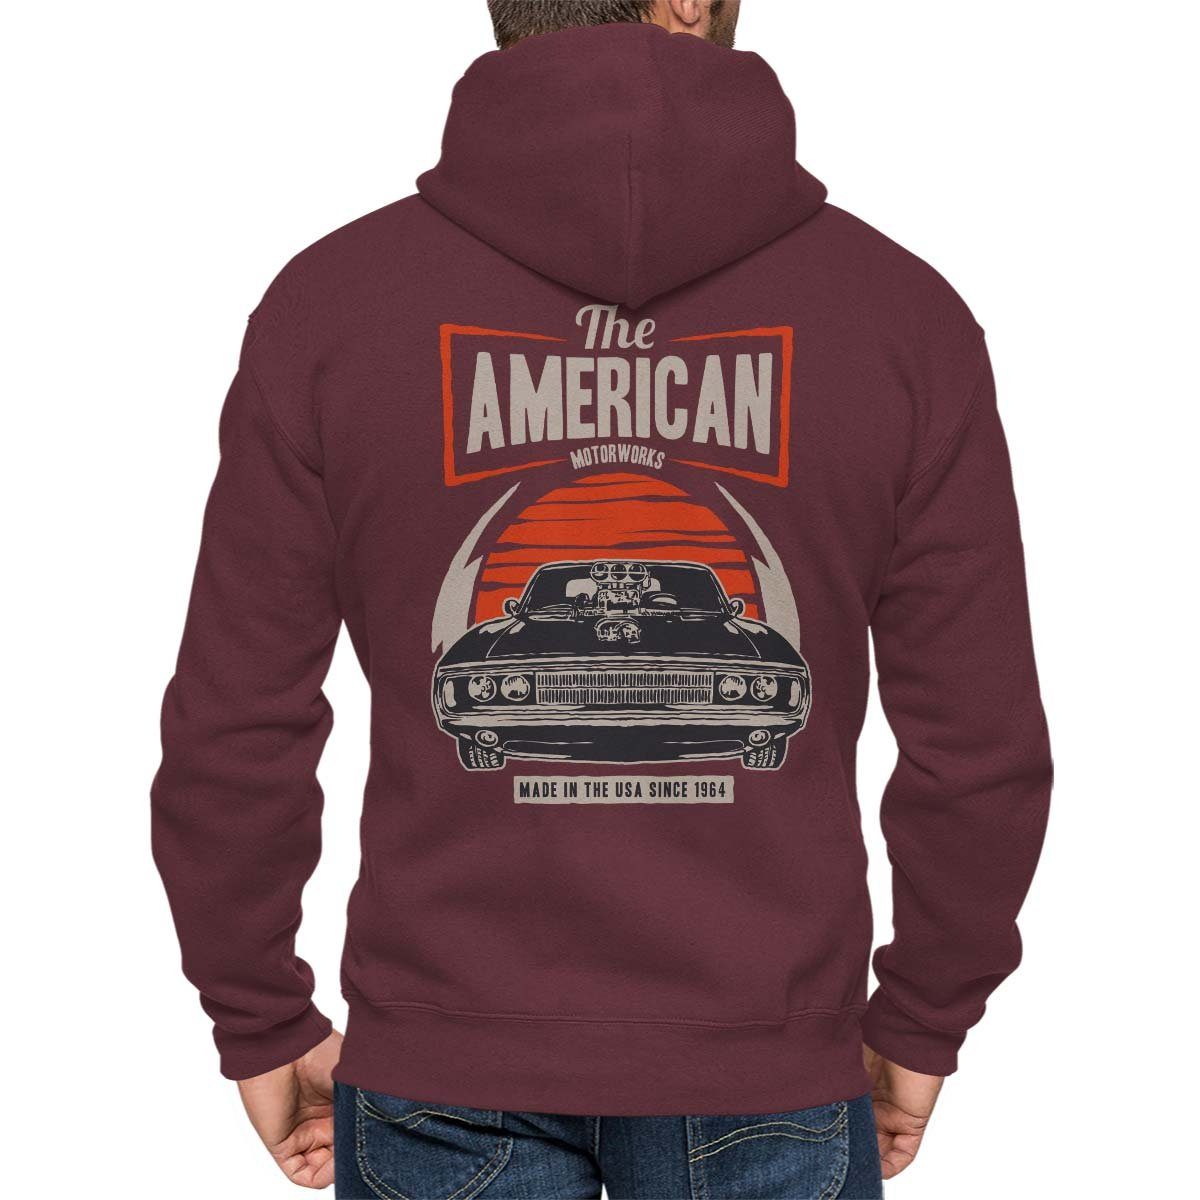 Rebel On Wheels Kapuzensweatjacke Kapuzenjacke Zip Hoodie The American mit Auto / US-Car Motiv Dunkel Rot